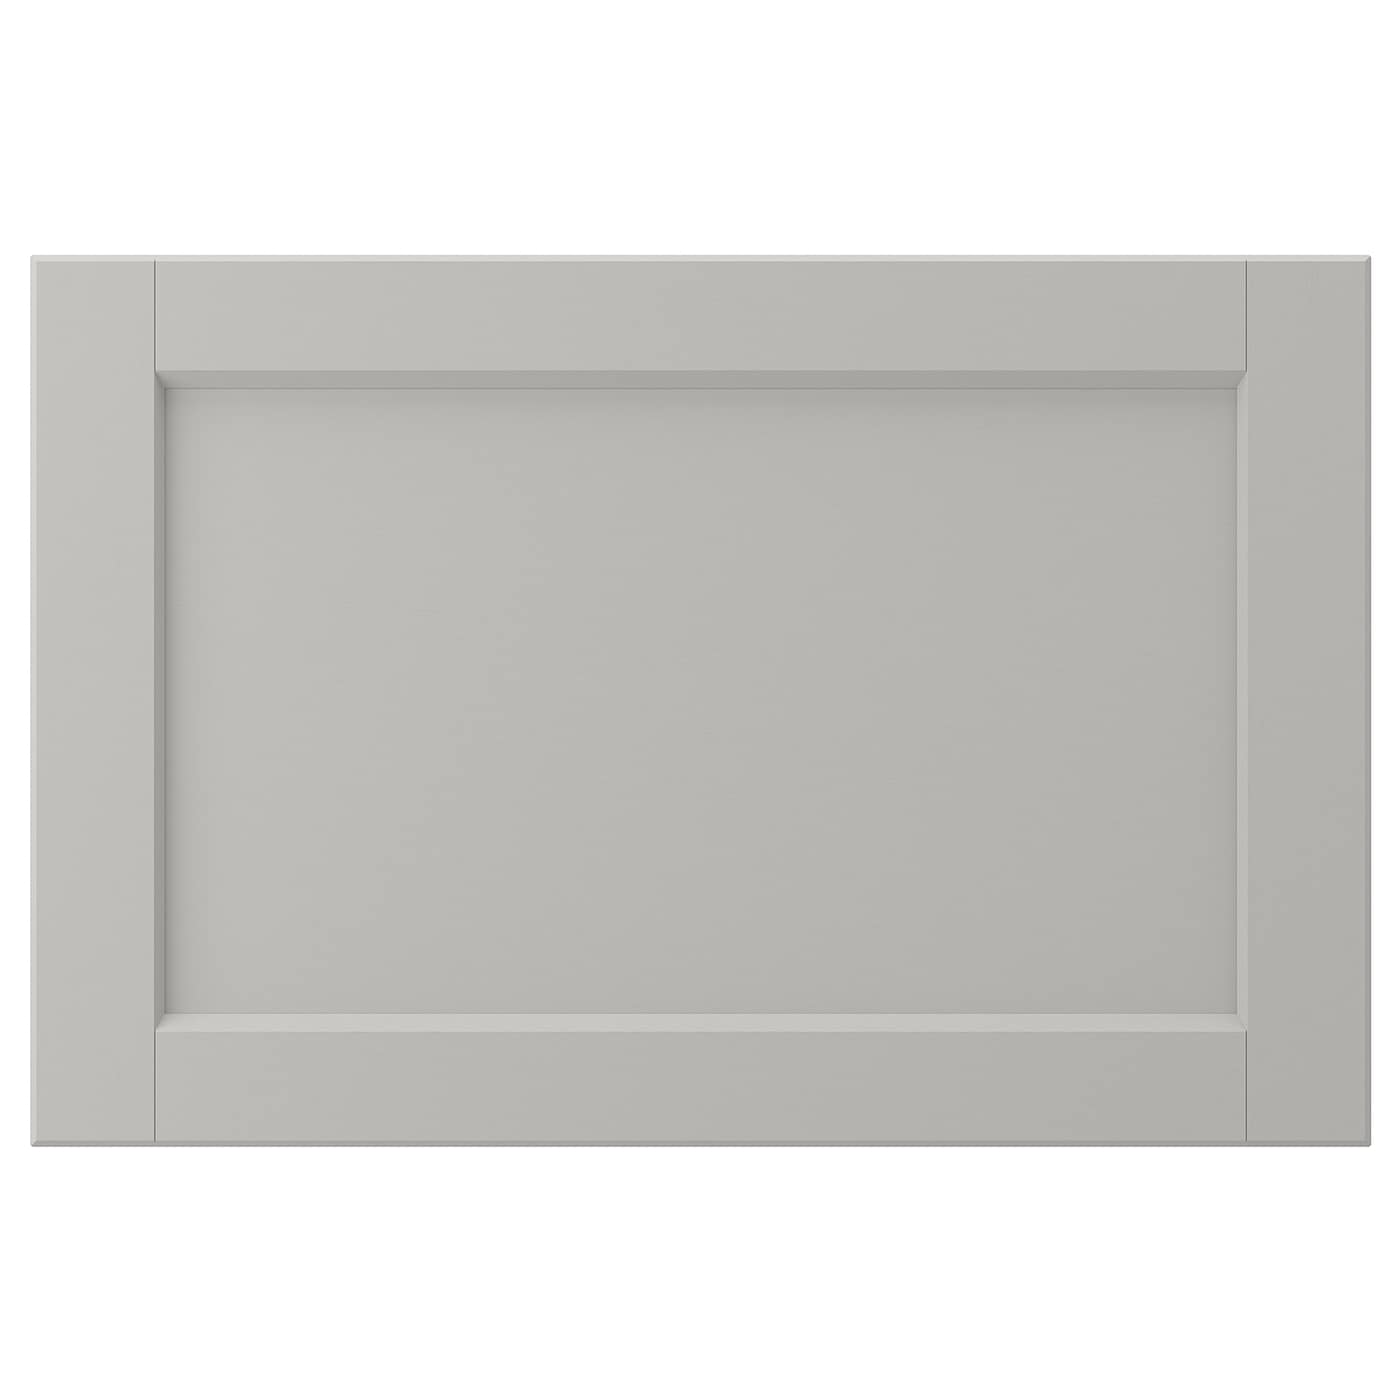 Фасад ящика - IKEA LERHYTTAN, 40х60 см, светло-серый, ЛЕРХЮТТАН ИКЕА